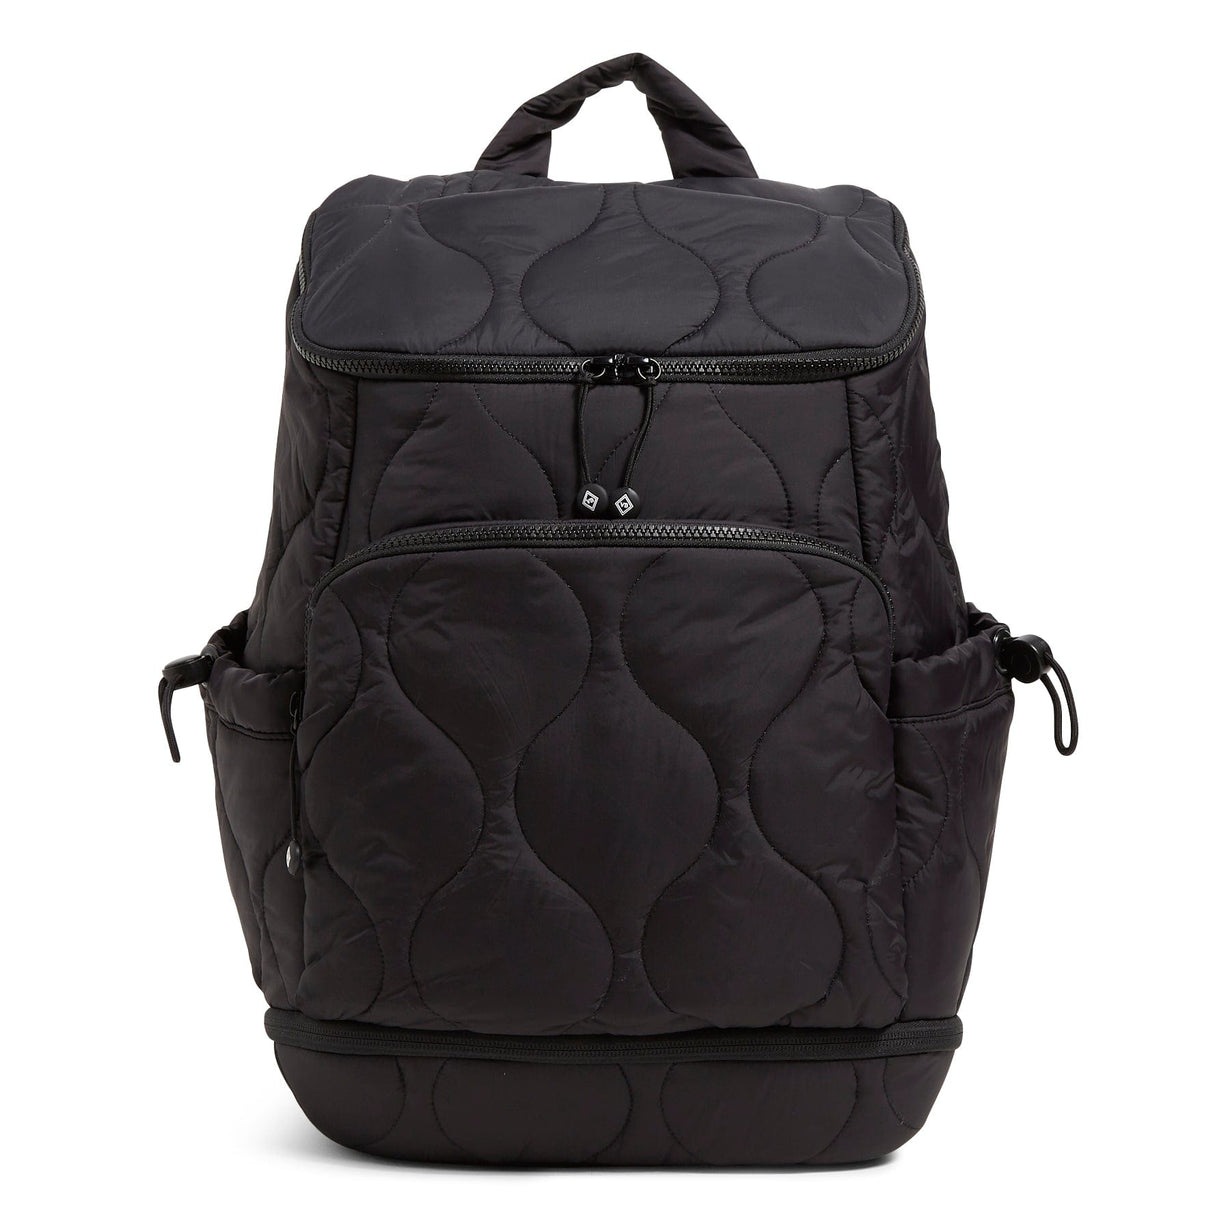 black lightweight backpack for commuting